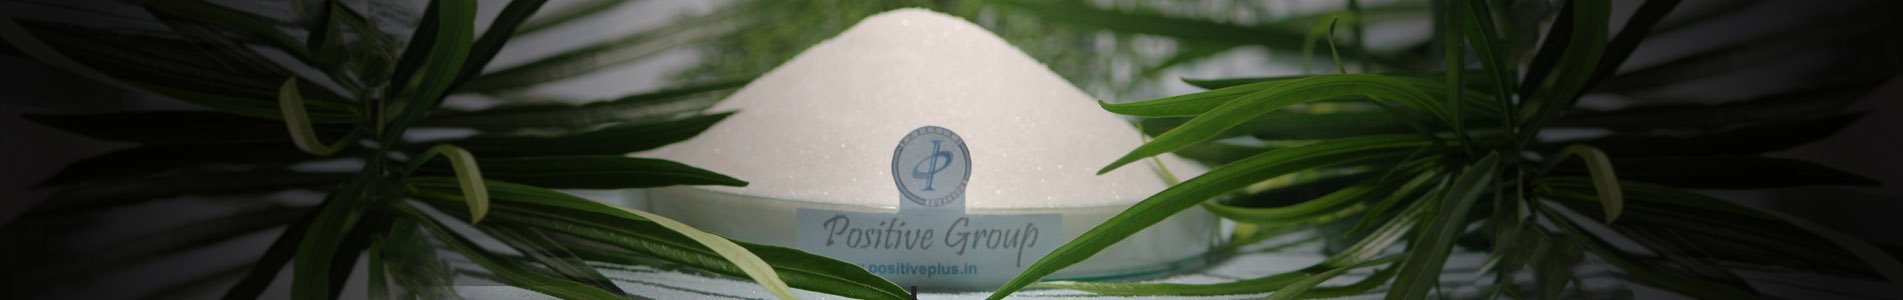 Monoammonium phosphate suppliers in india